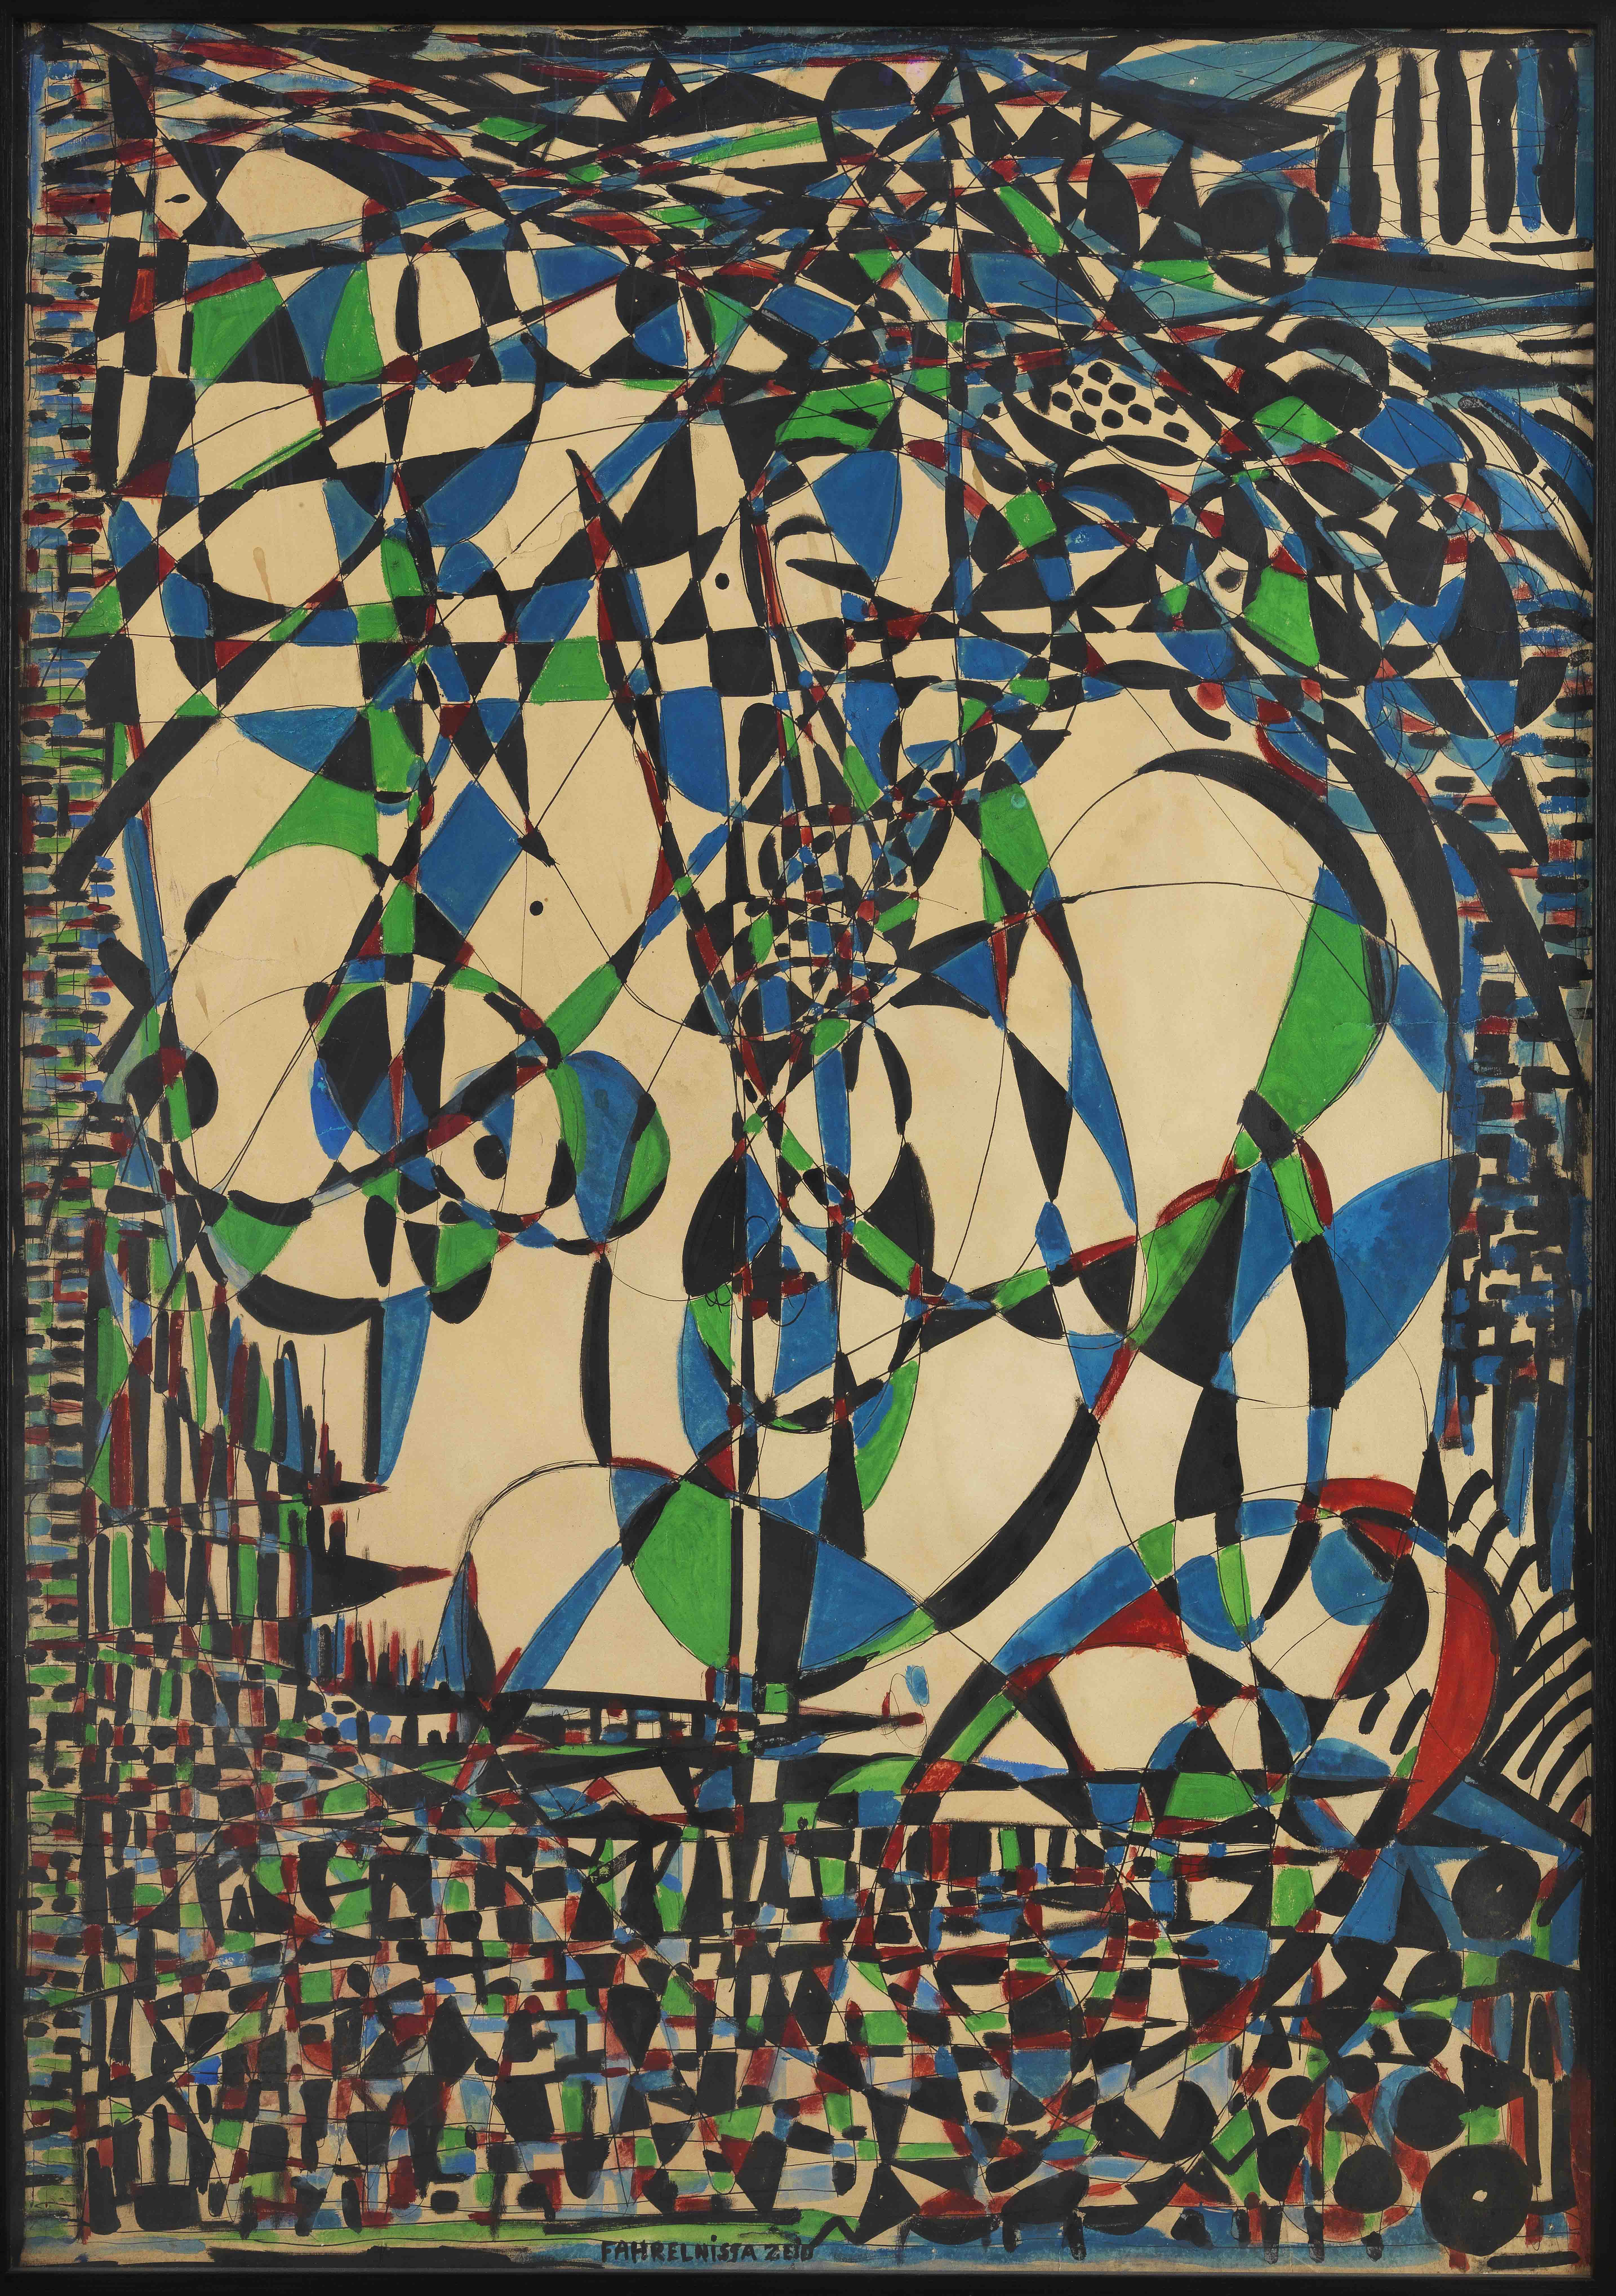 Fahrelnissa Zeid, Soyut Komposizyon, 1950’ler, Kağıt üzerine karışık teknik, 104x74 cm